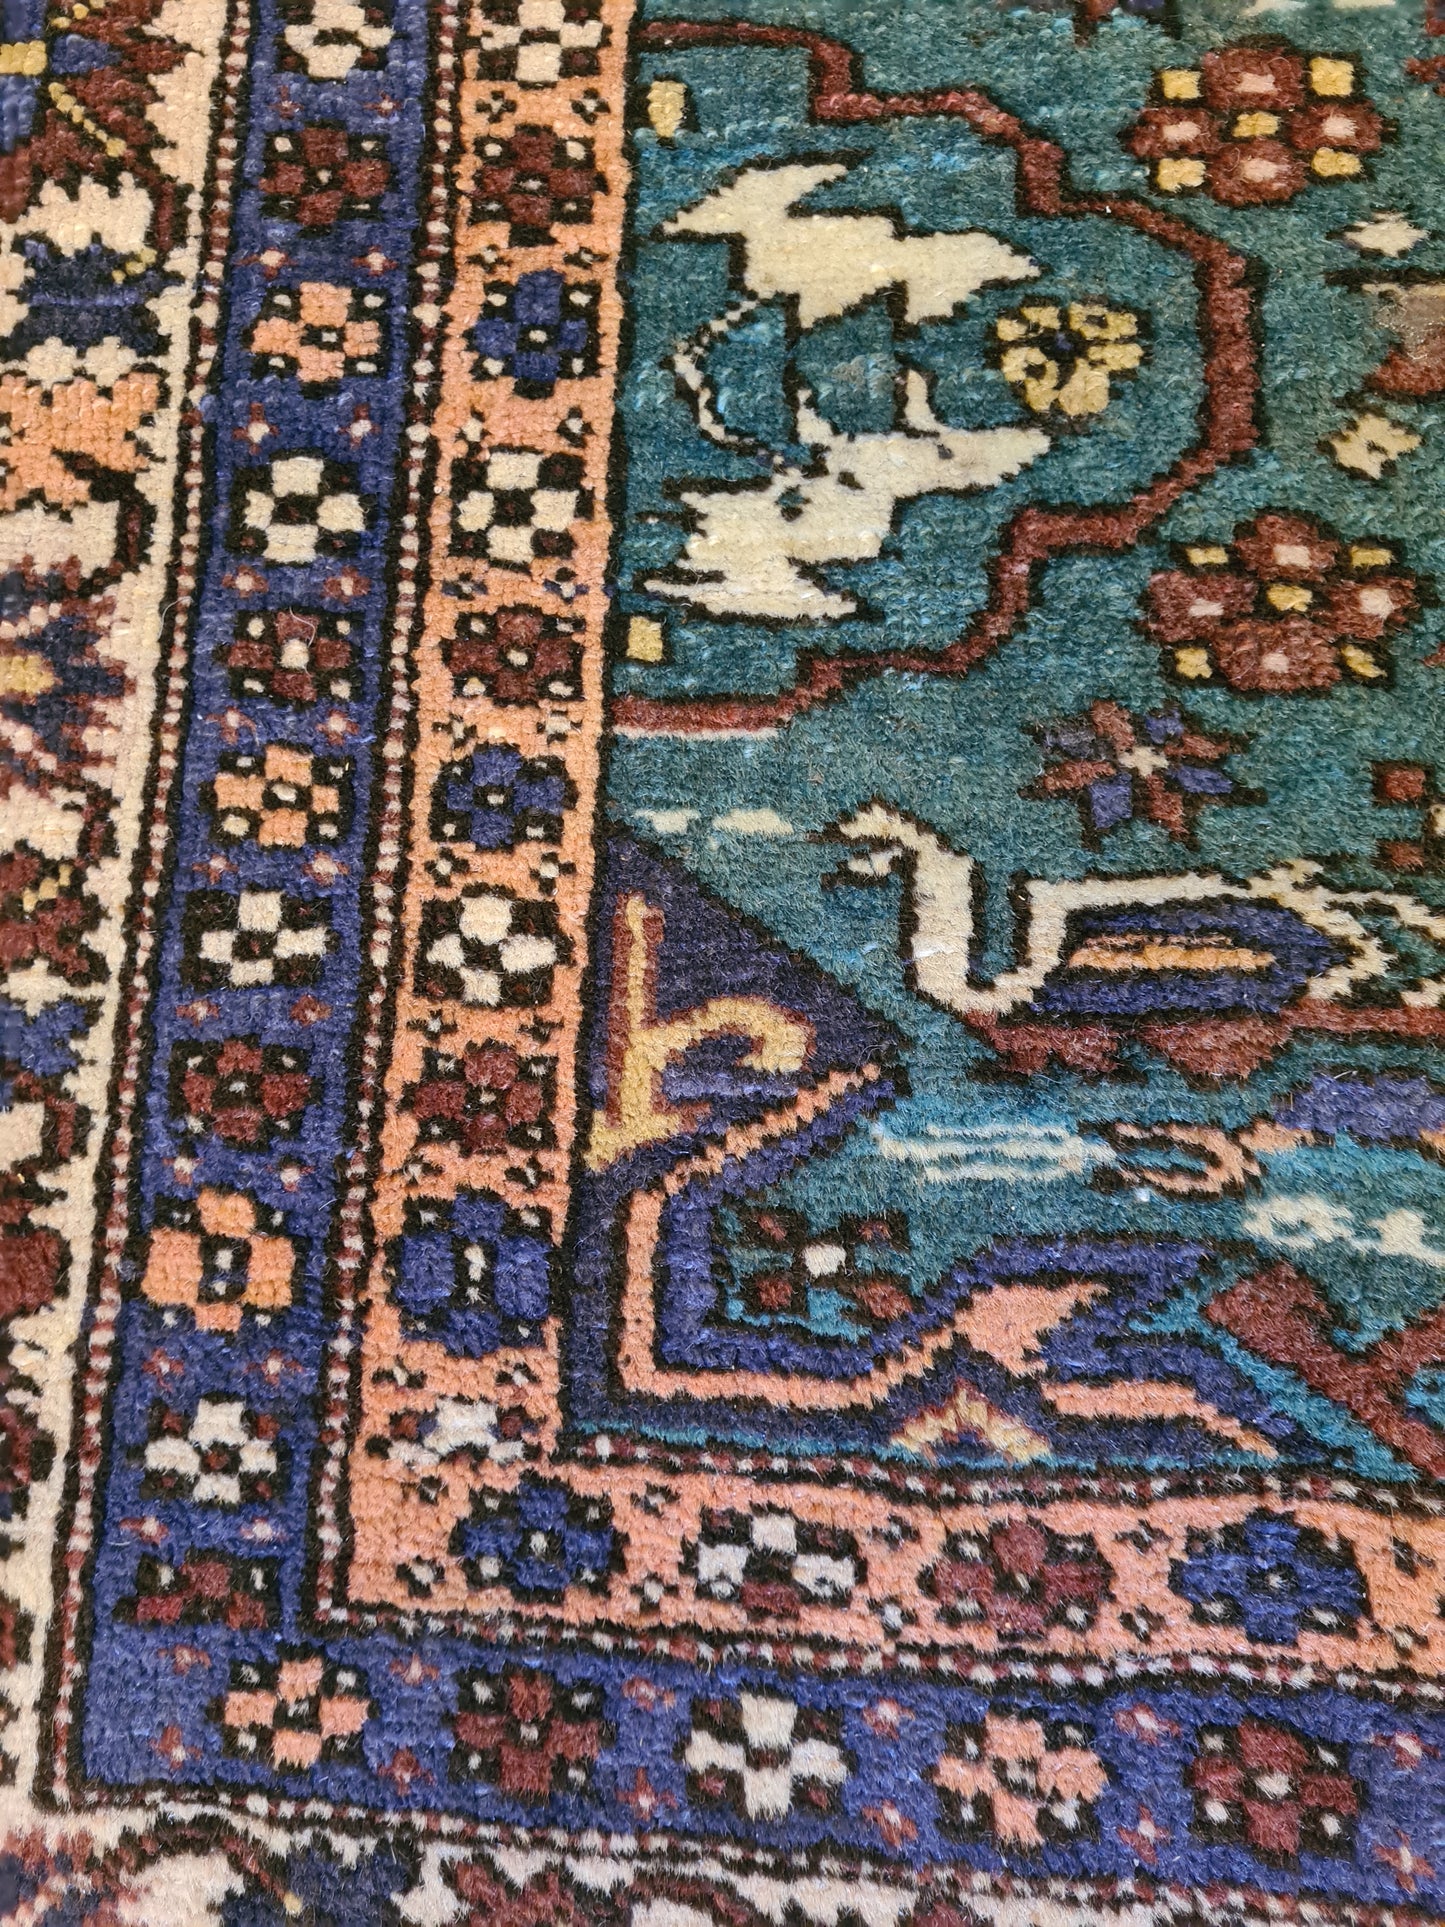 Perpidil Kasak Orientteppich aus dem Kaukasus Sammlerstück 204x133cm